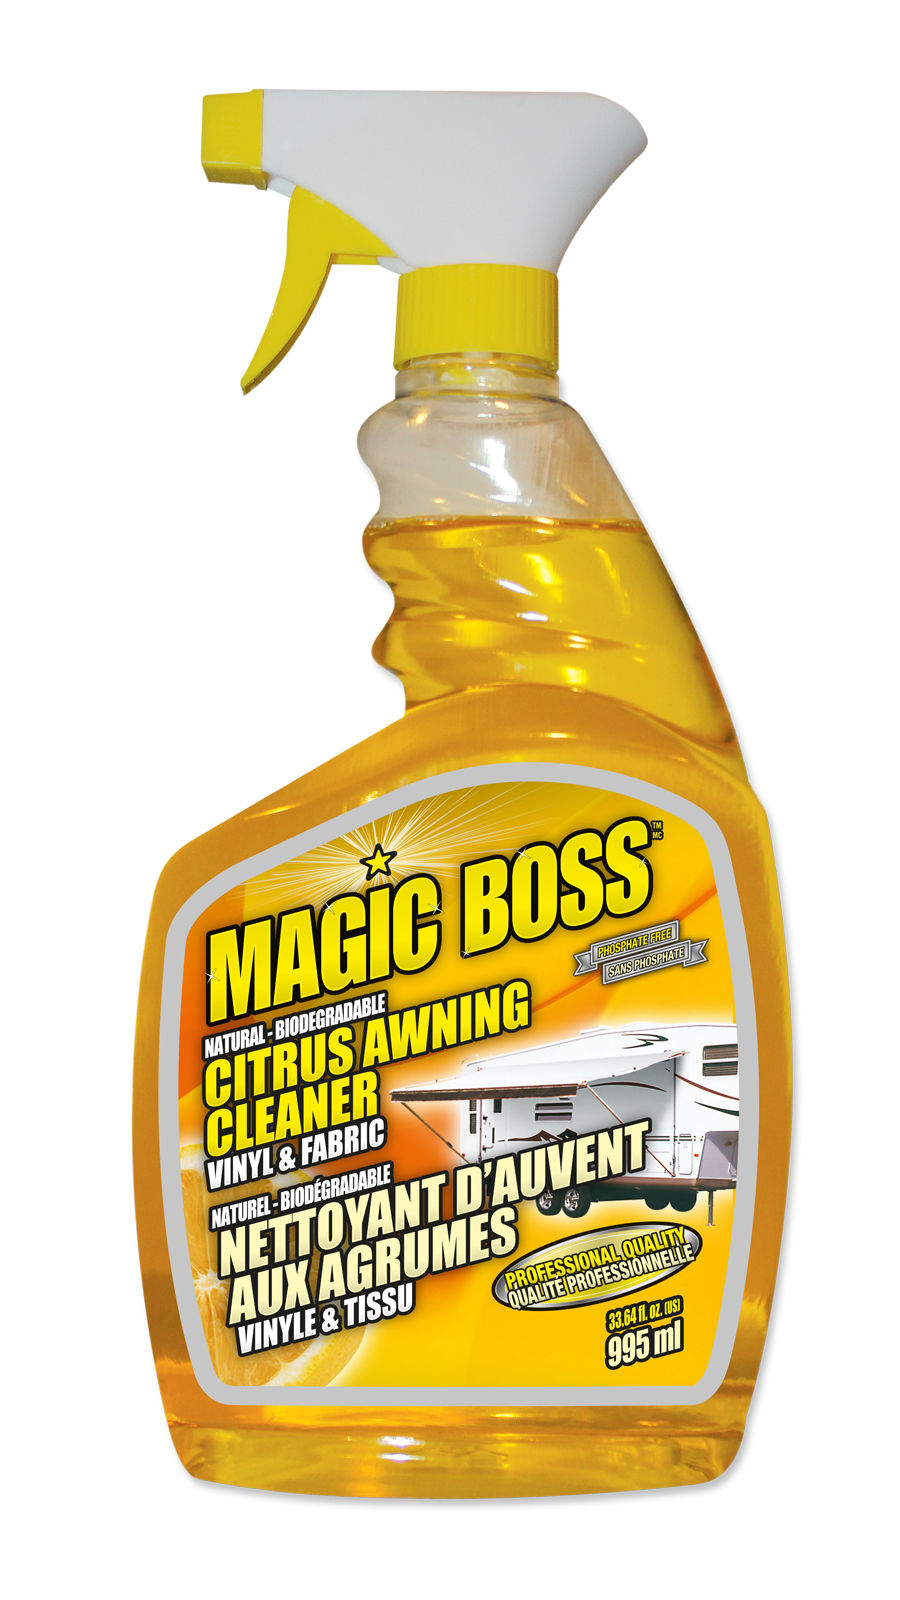 Magic Boss 1400 - Box of 12, Citrus Awning Cleaner (995 ml)